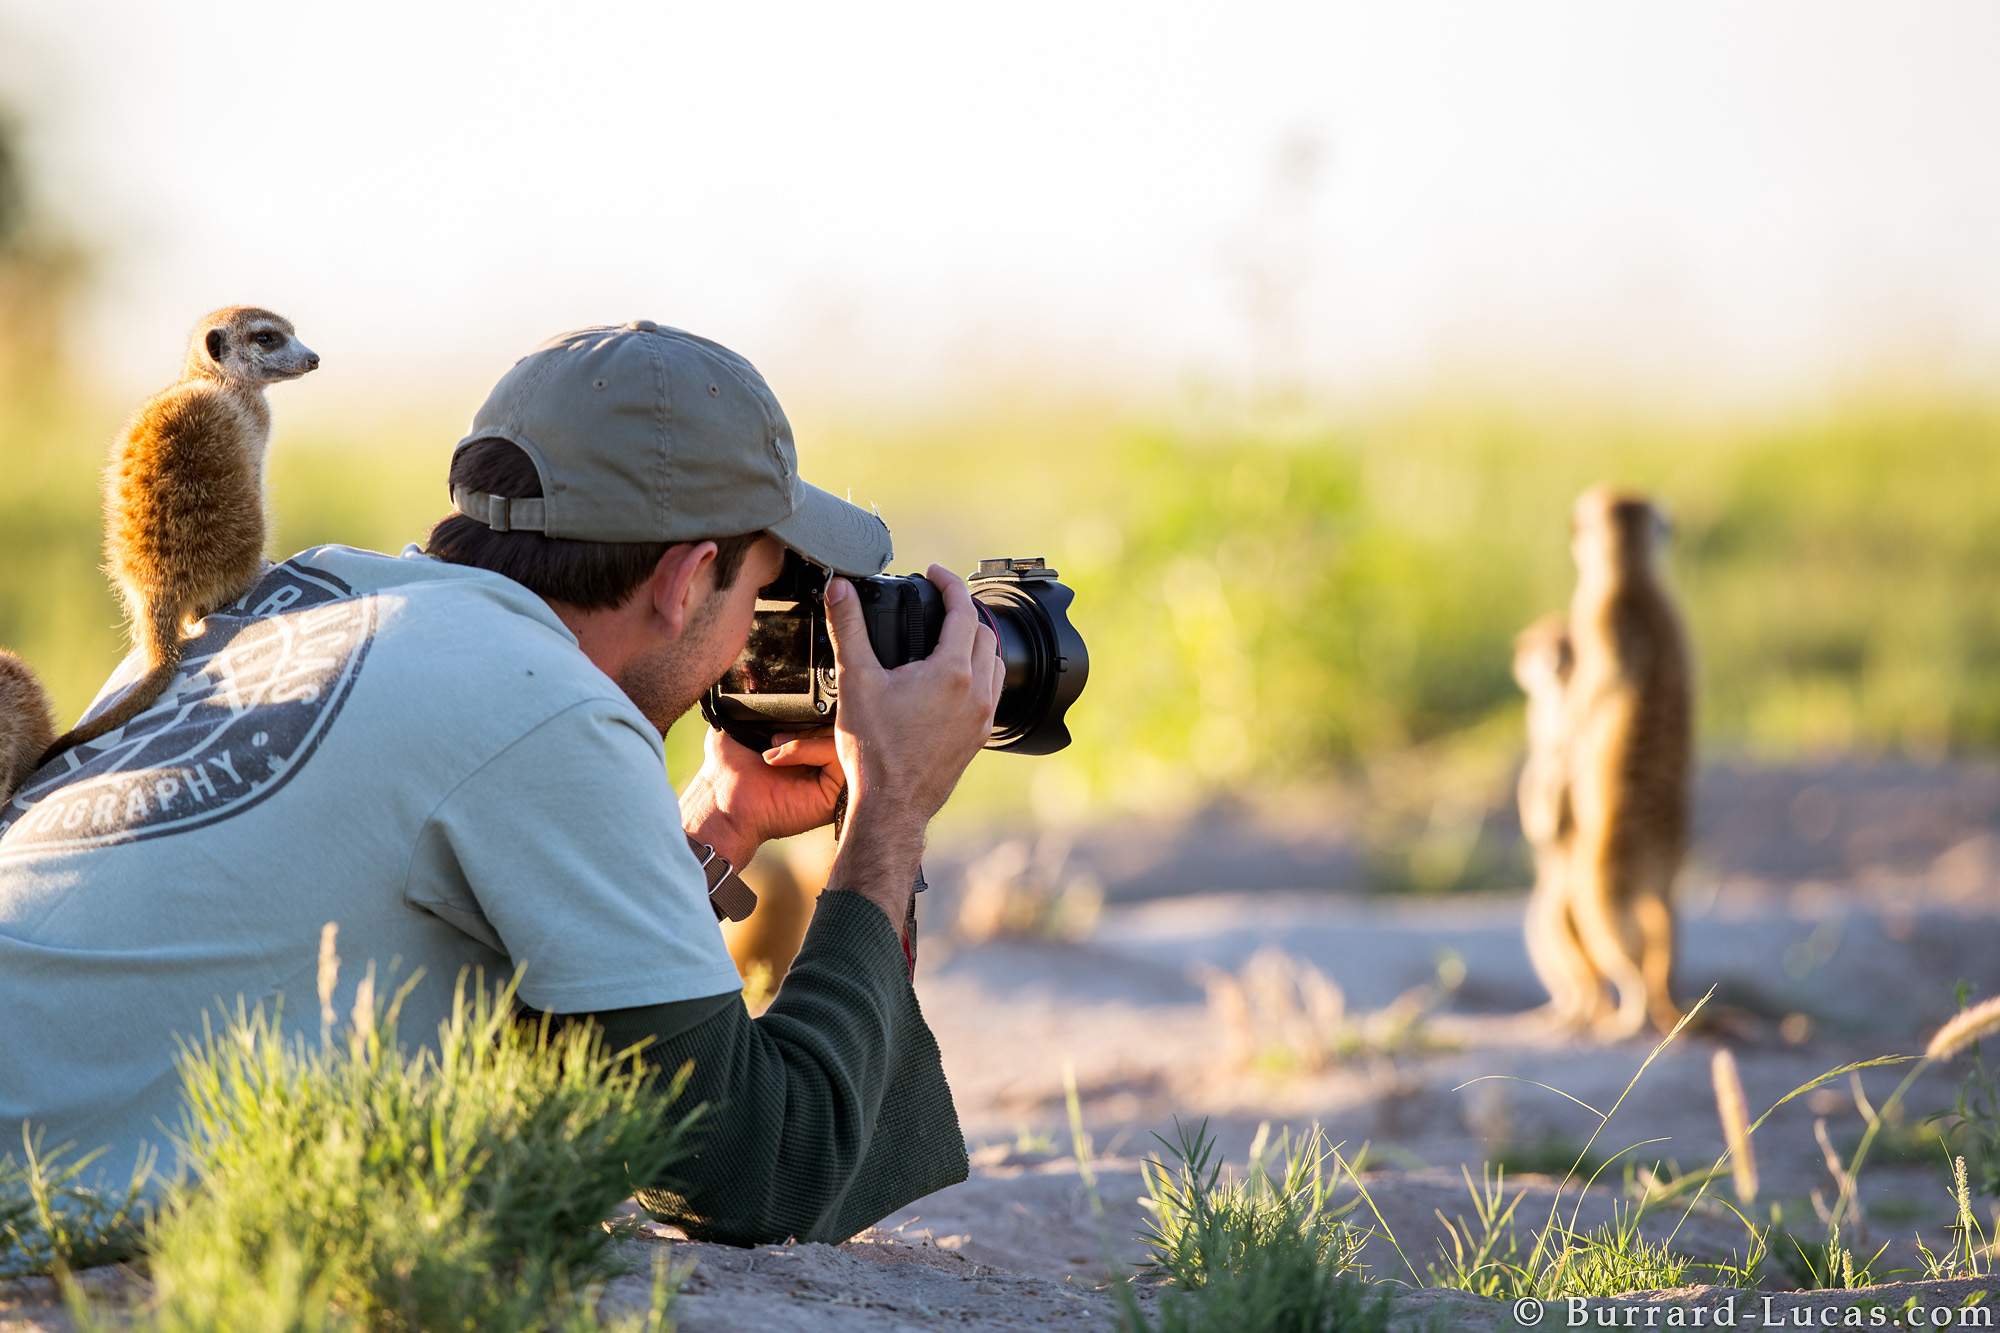 500px Blog » The passionate photographer community. » 10 Wildlife ...